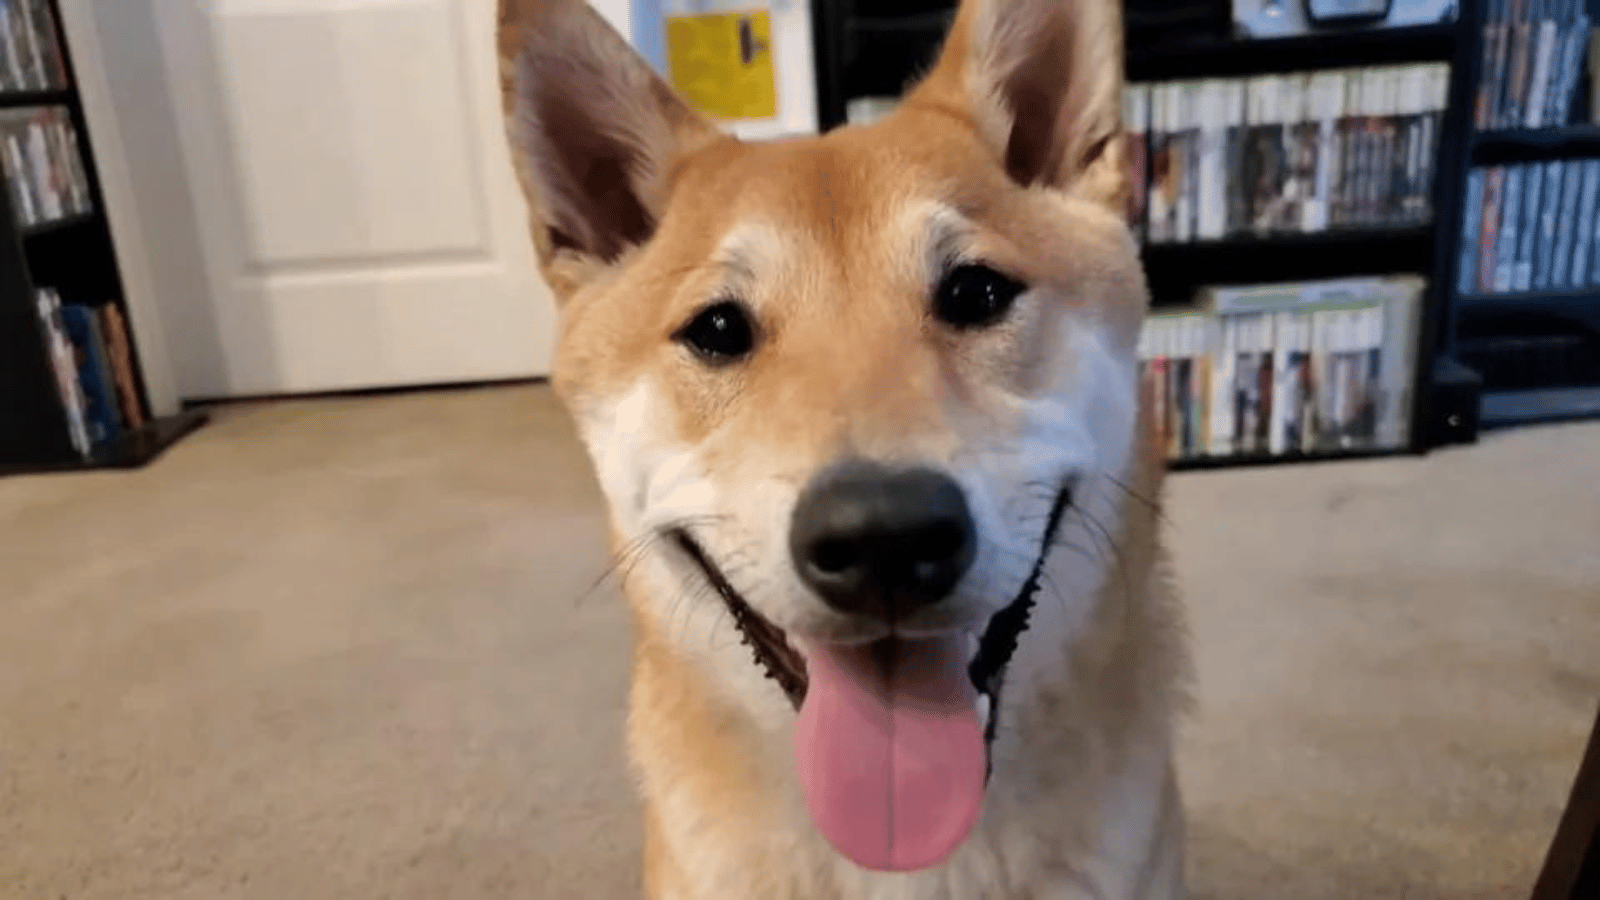 Peanut Butter Shibu Inu speedrunning dog (LS: OLED)